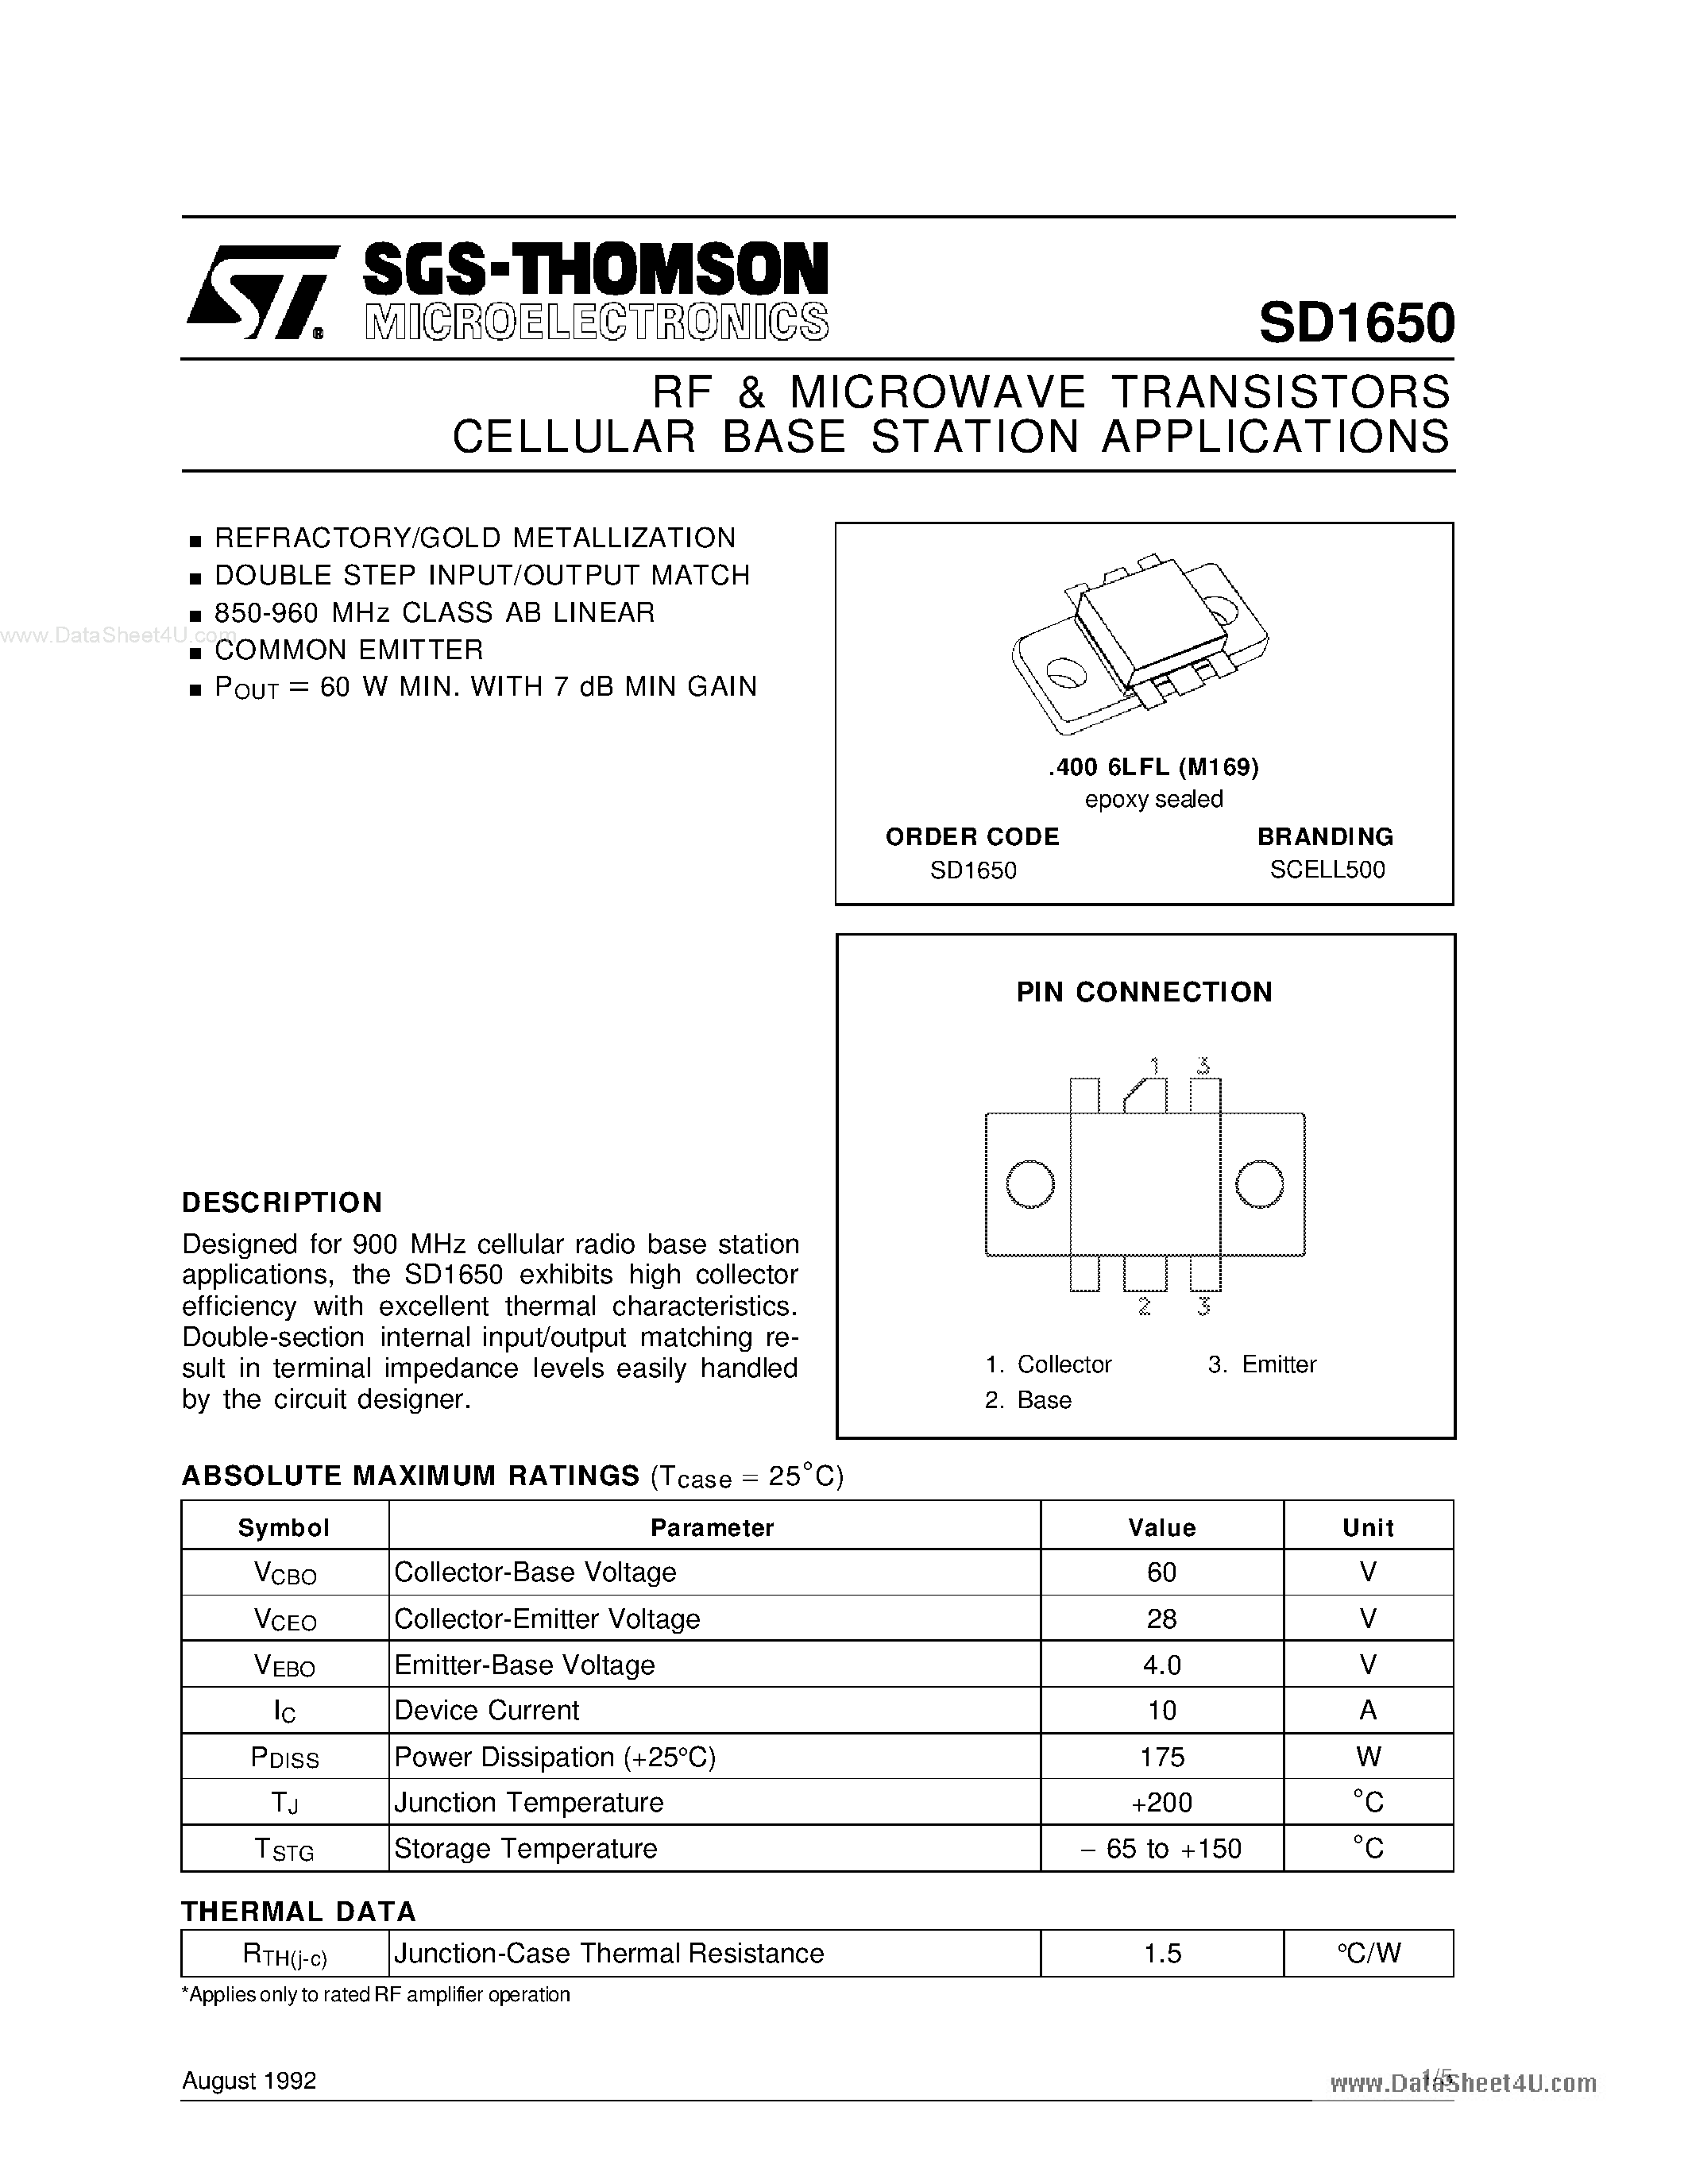 Datasheet SD1650 - RF & MICROWAVE TRANSISTORS CELLULAR BASE STATION APPLICATIONS page 1